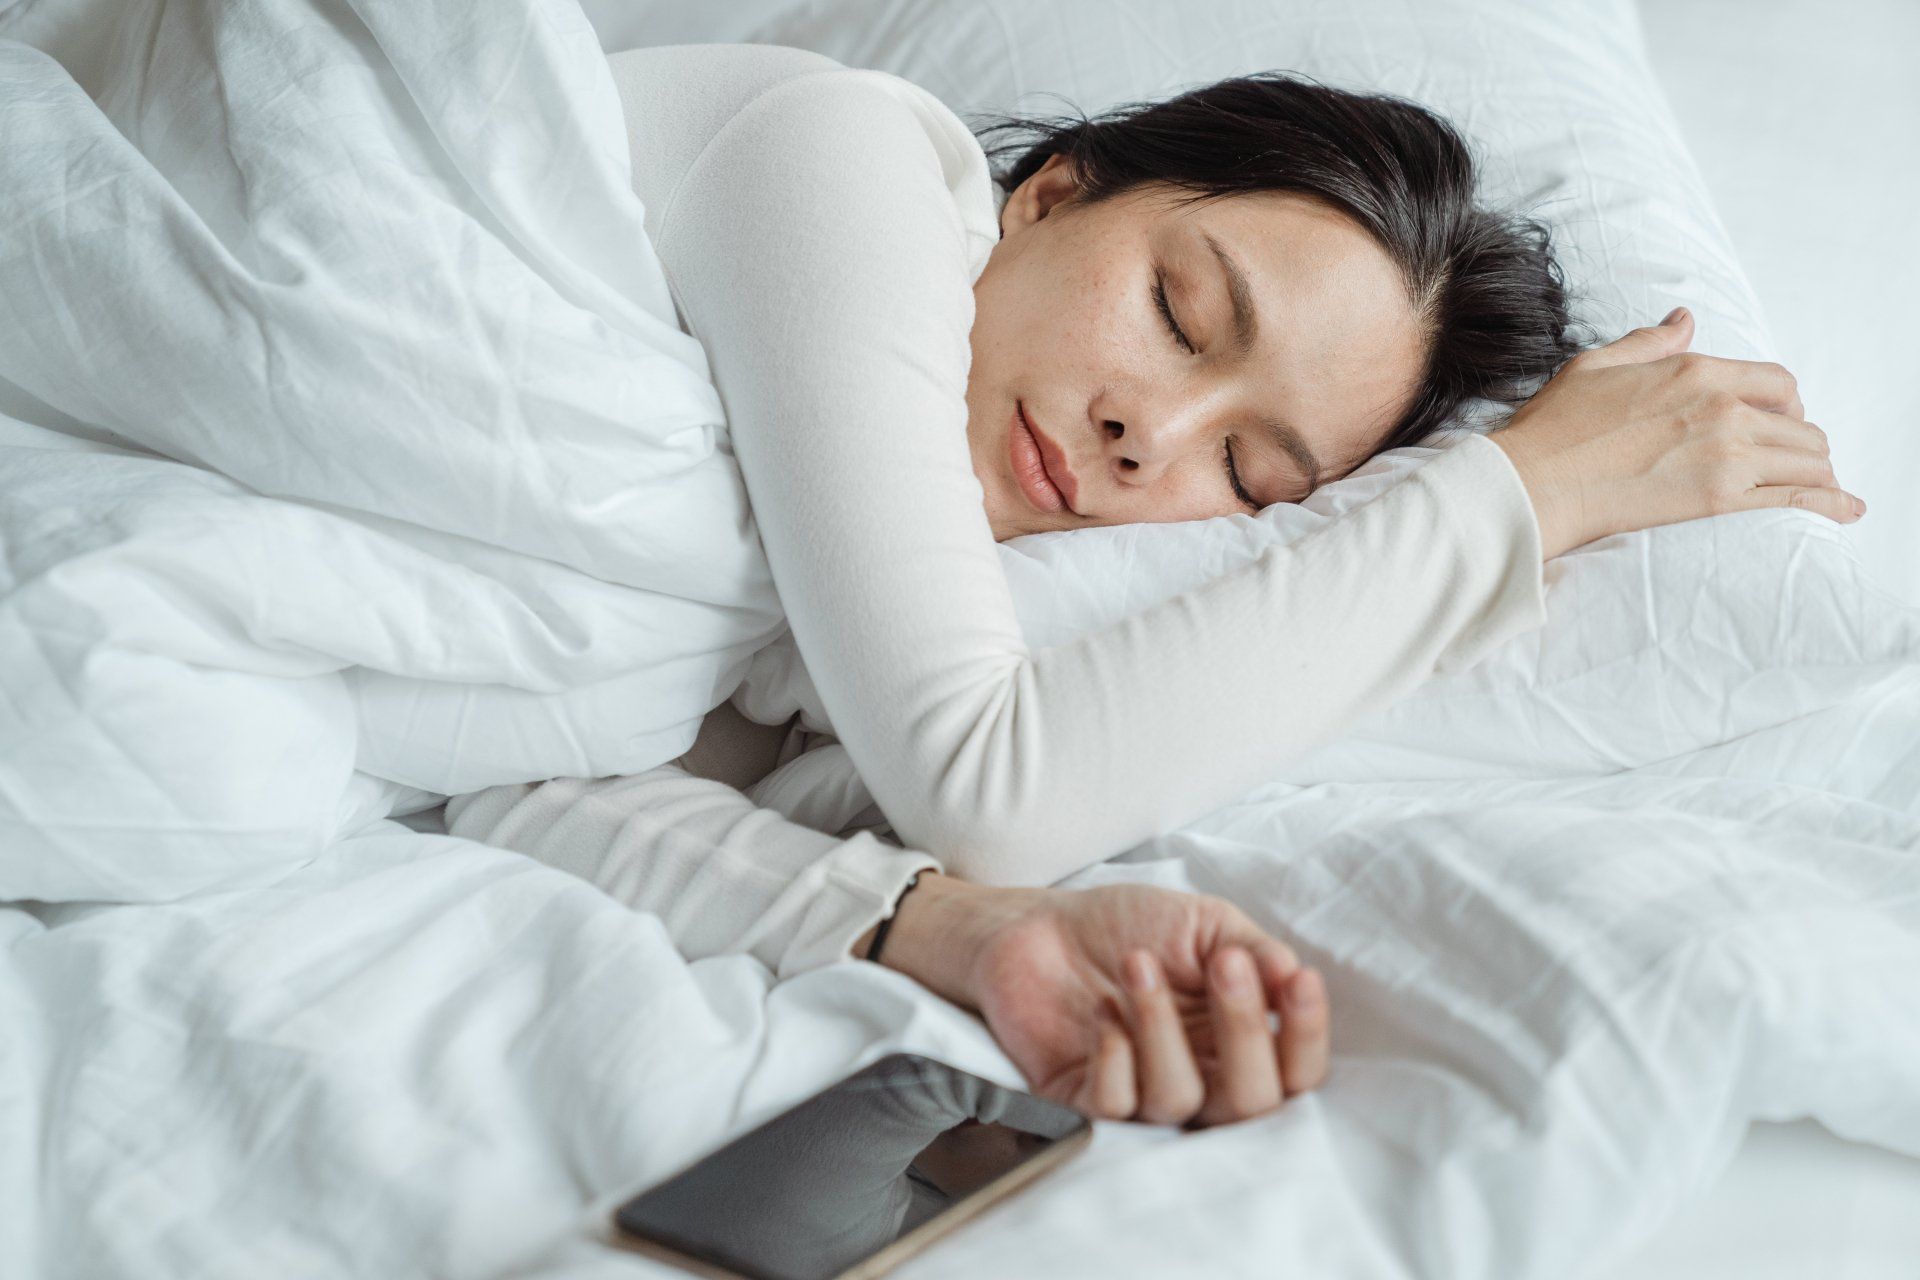 Woman sleeping | Sleep Apnea and Snoring Treatment Overland Park KS 66221